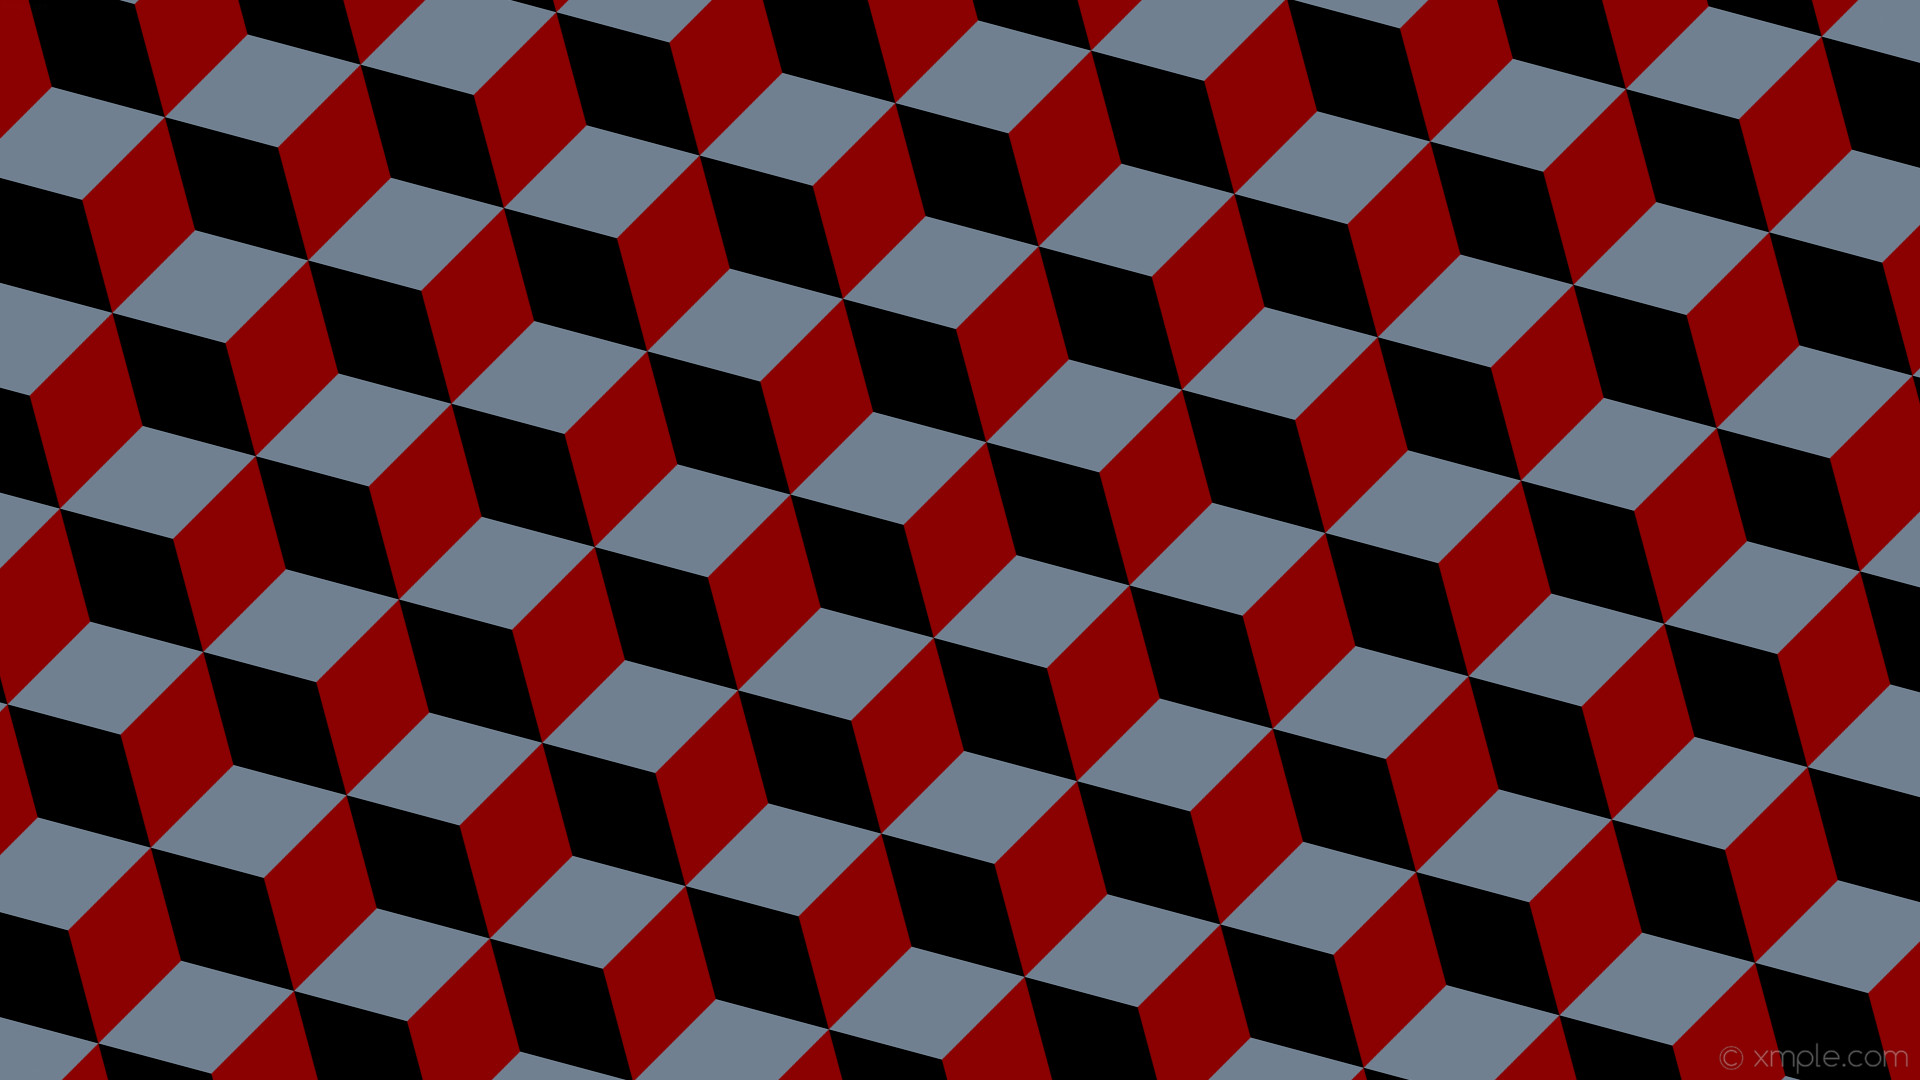 1920x1080 wallpaper grey 3d cubes red black dark red slate gray #8b0000 #708090  #000000